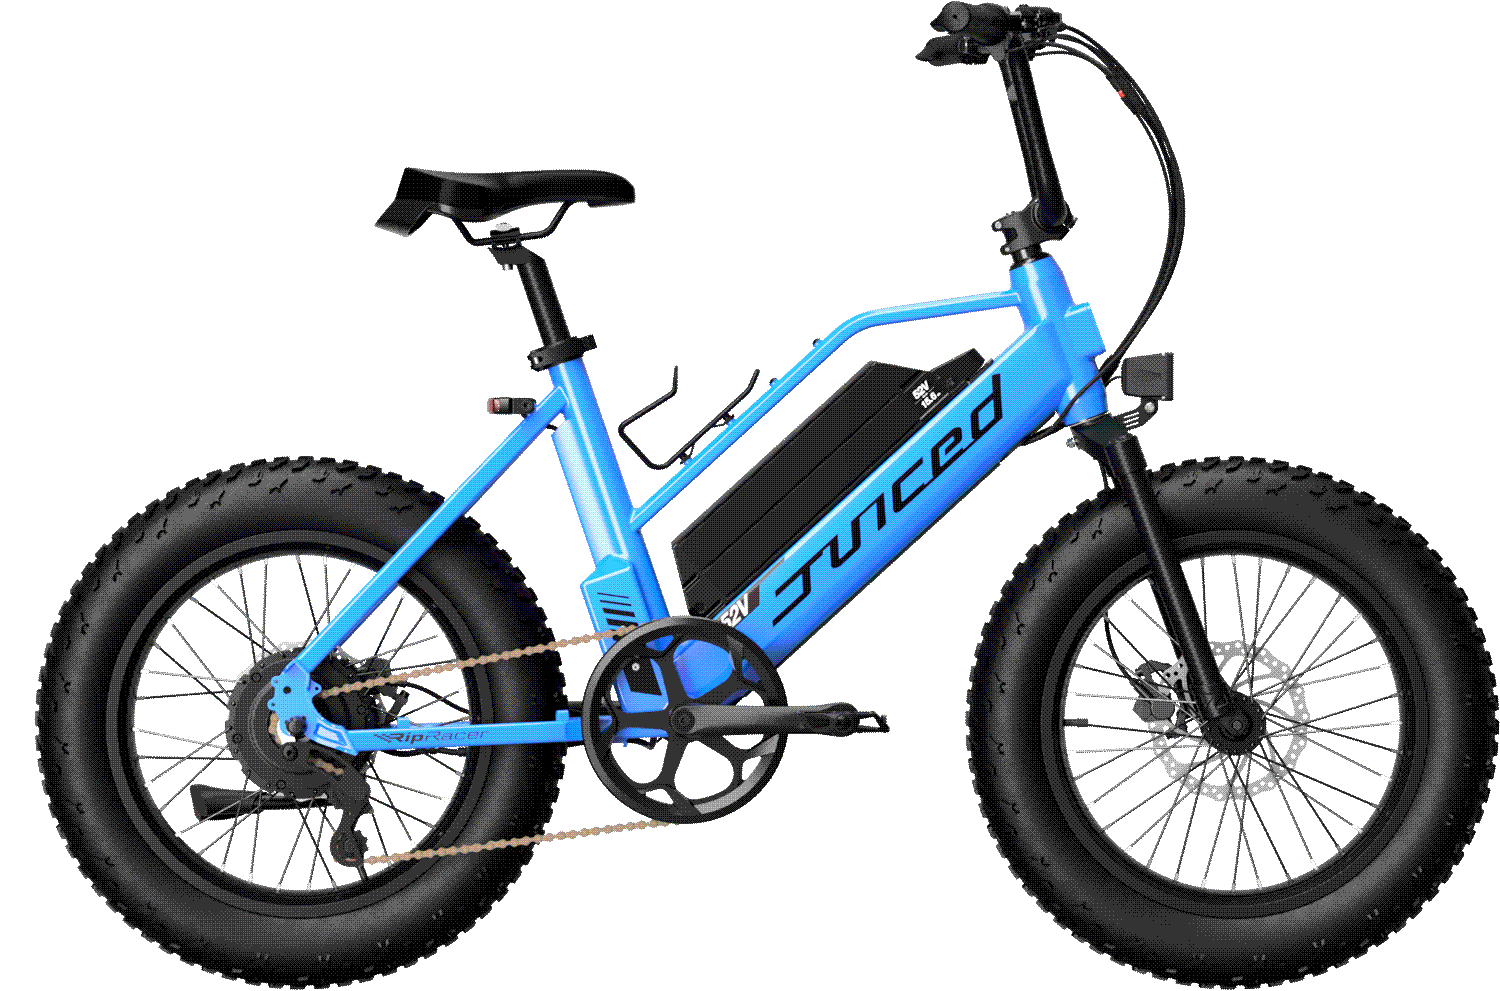 Juiced Bikes RipRacer bicicleta electrica accesorios